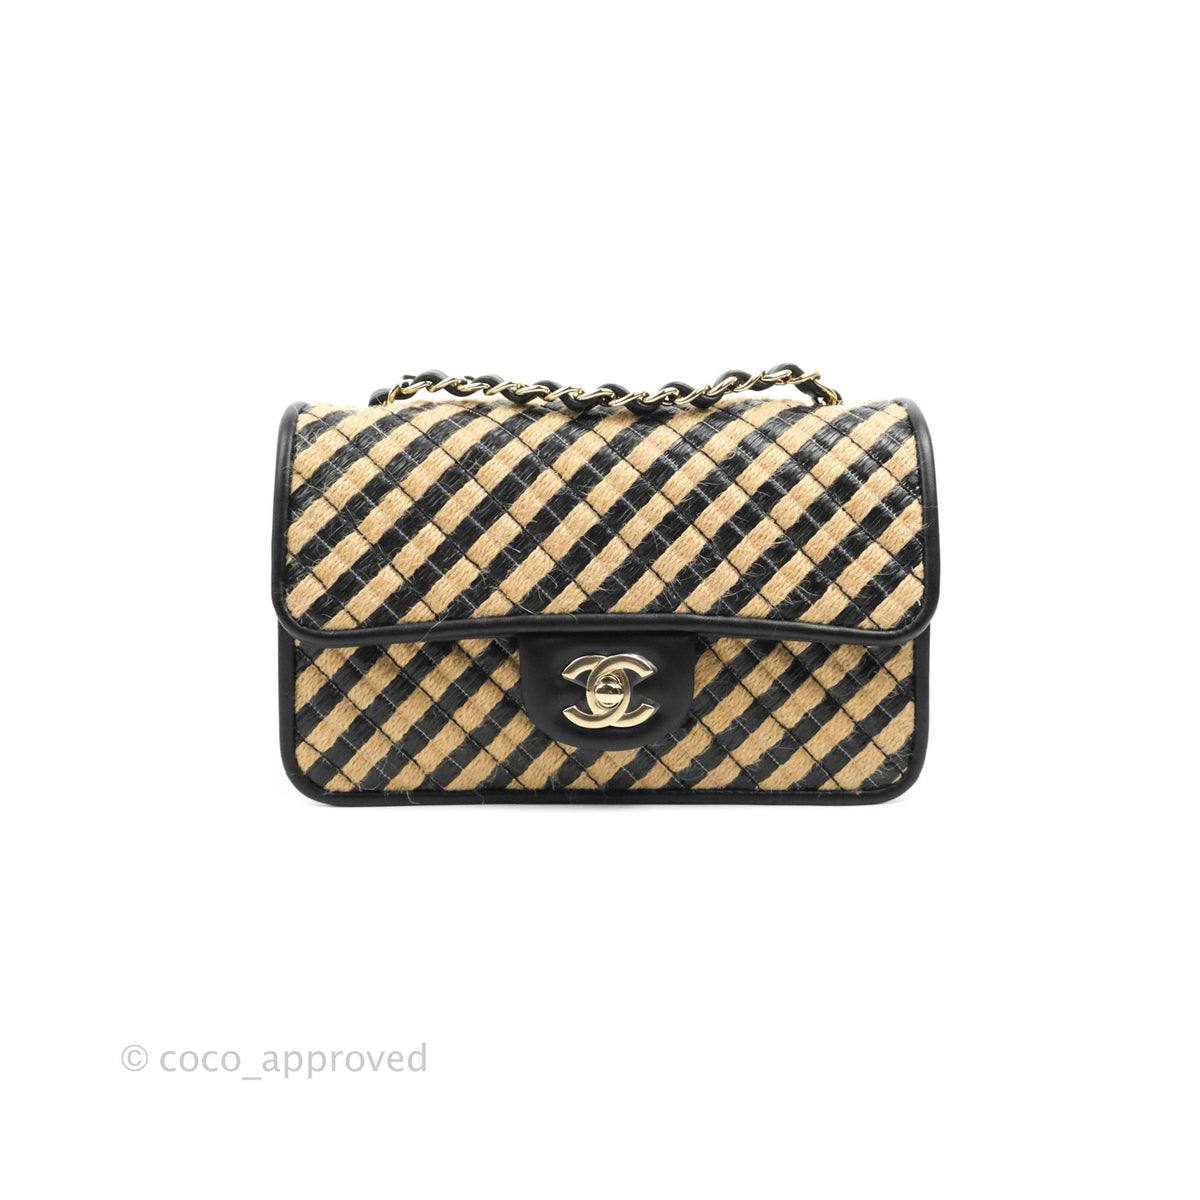 MINI~MINI~MINI! Mini Flap Thread  Chanel handbags, Chanel coin